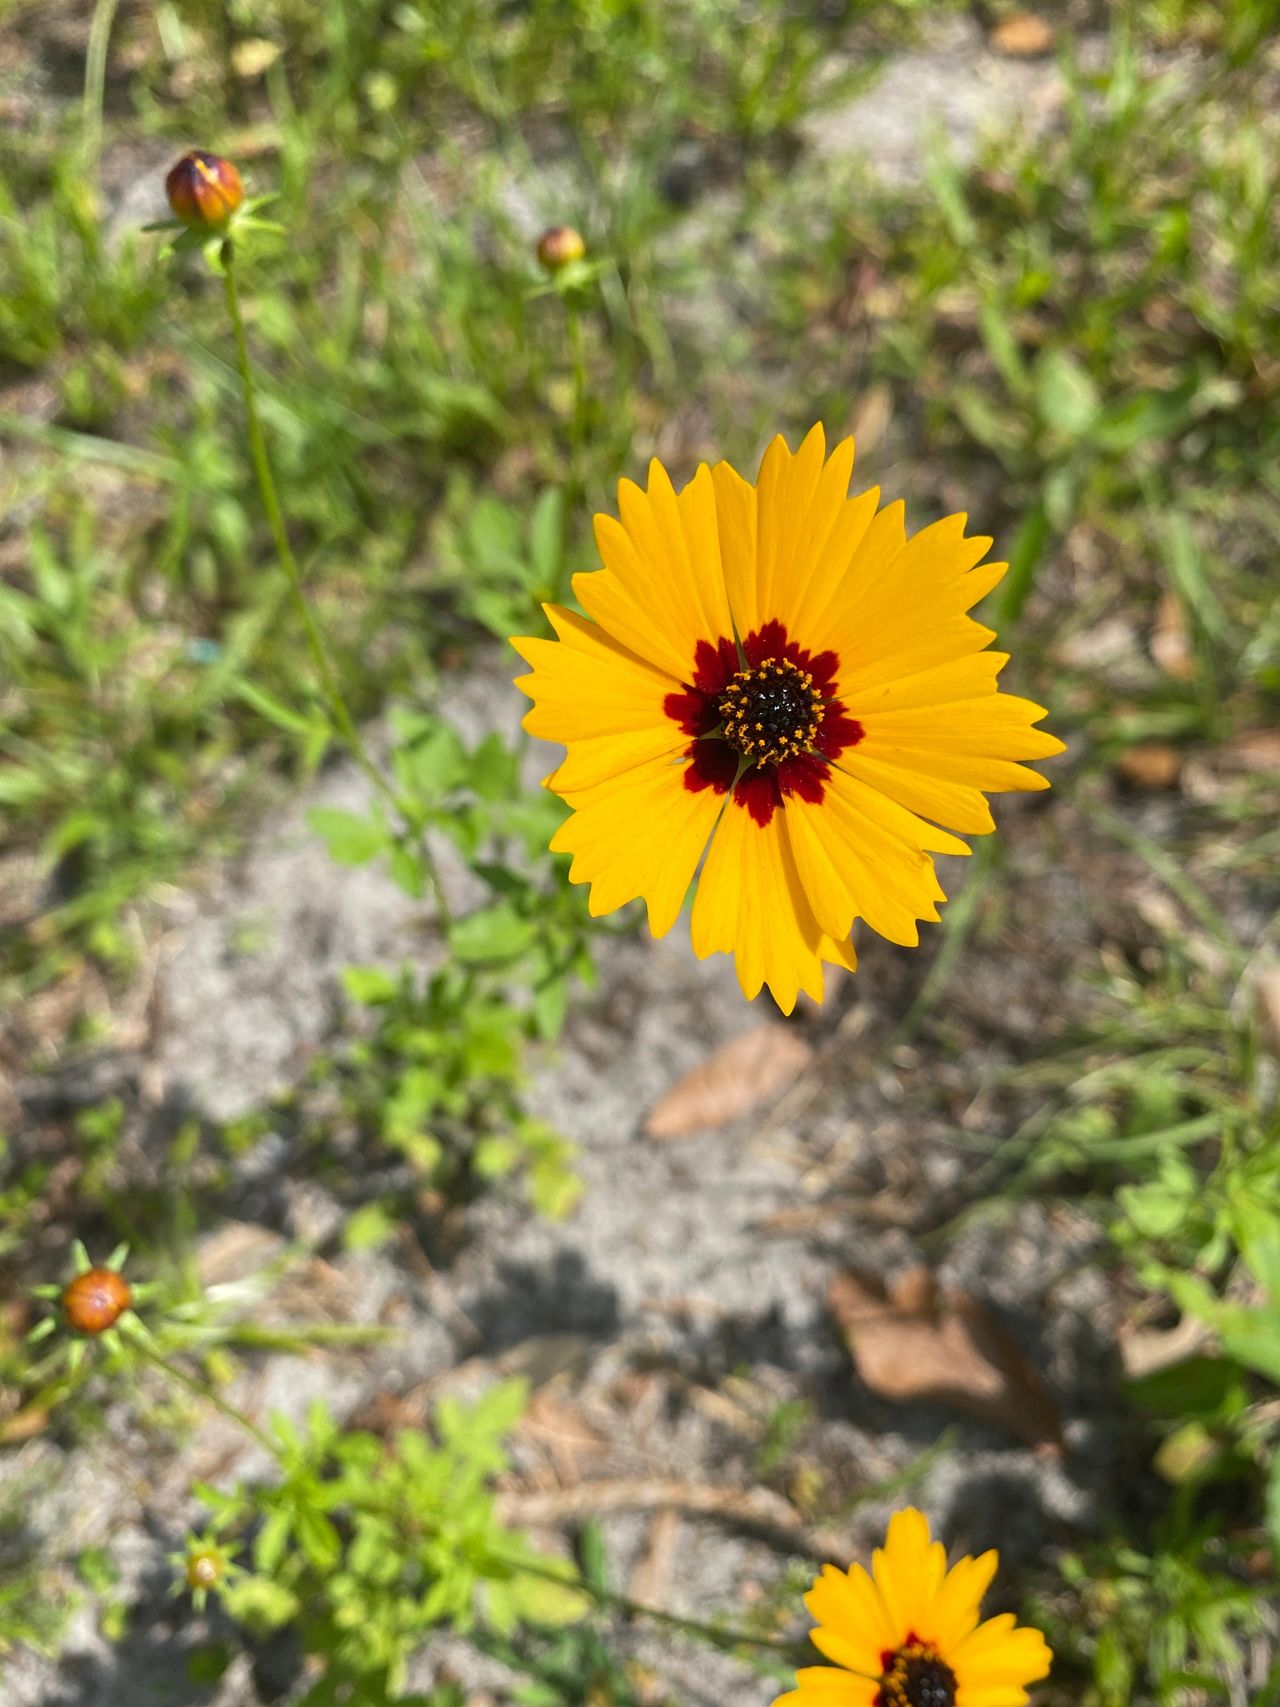 Roadside Wildflowers of Florida